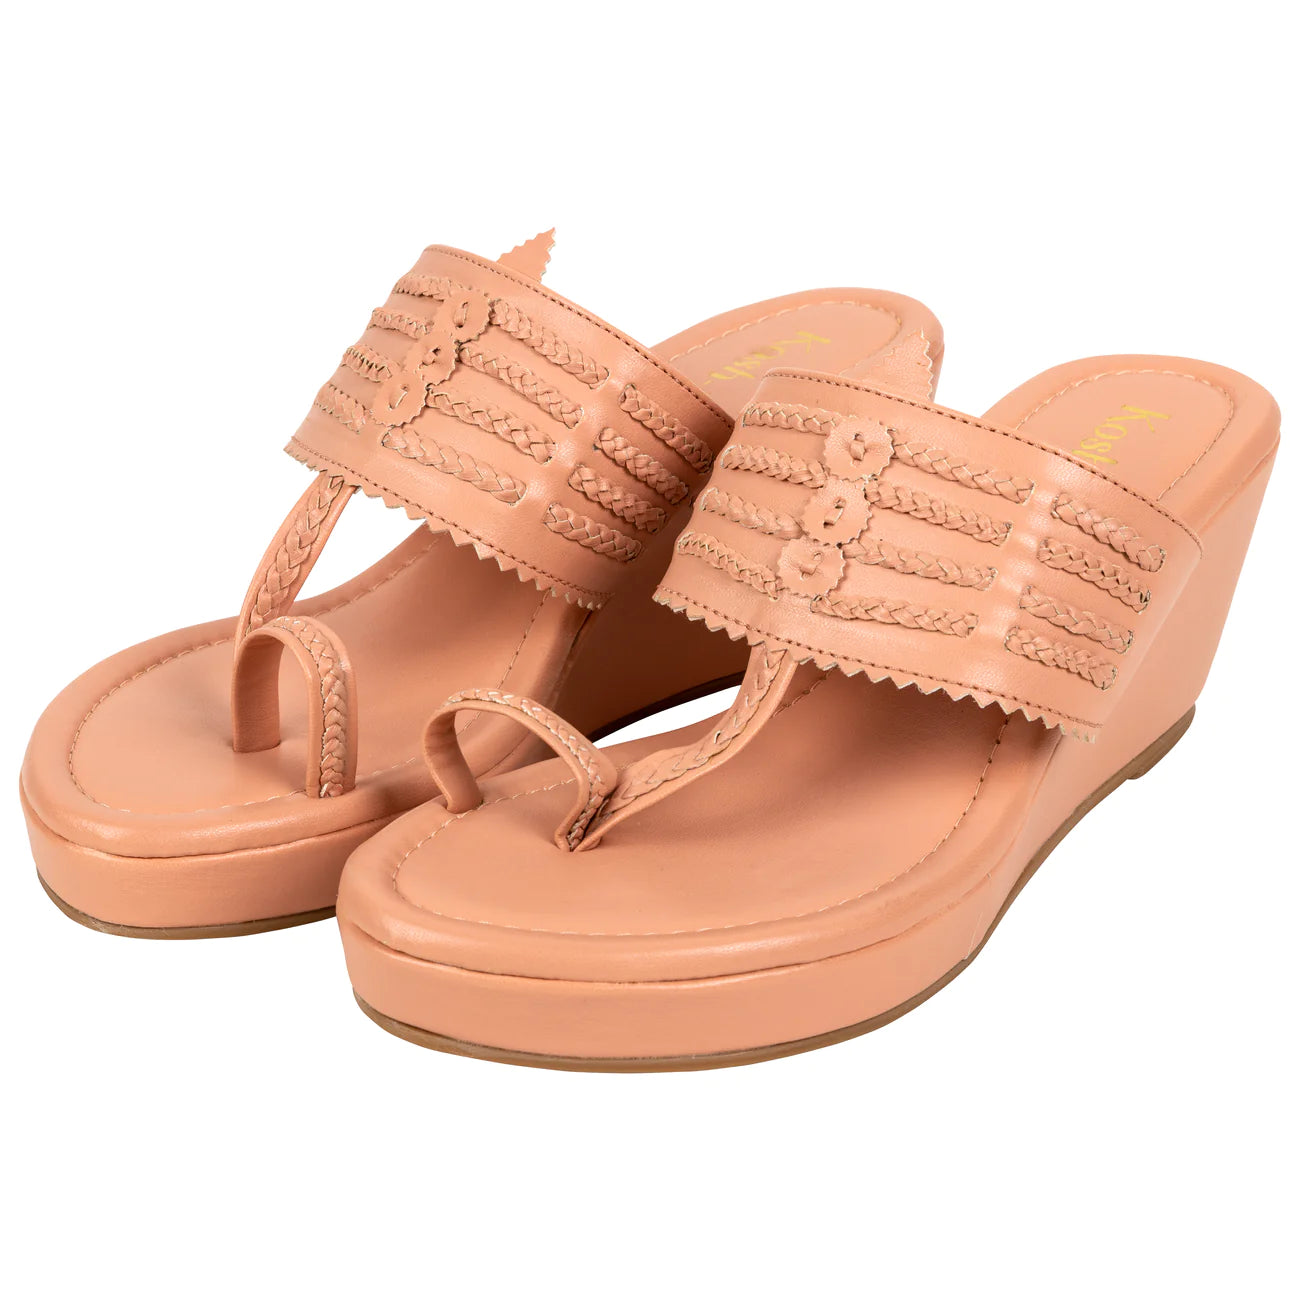 peach wedge sandals for women